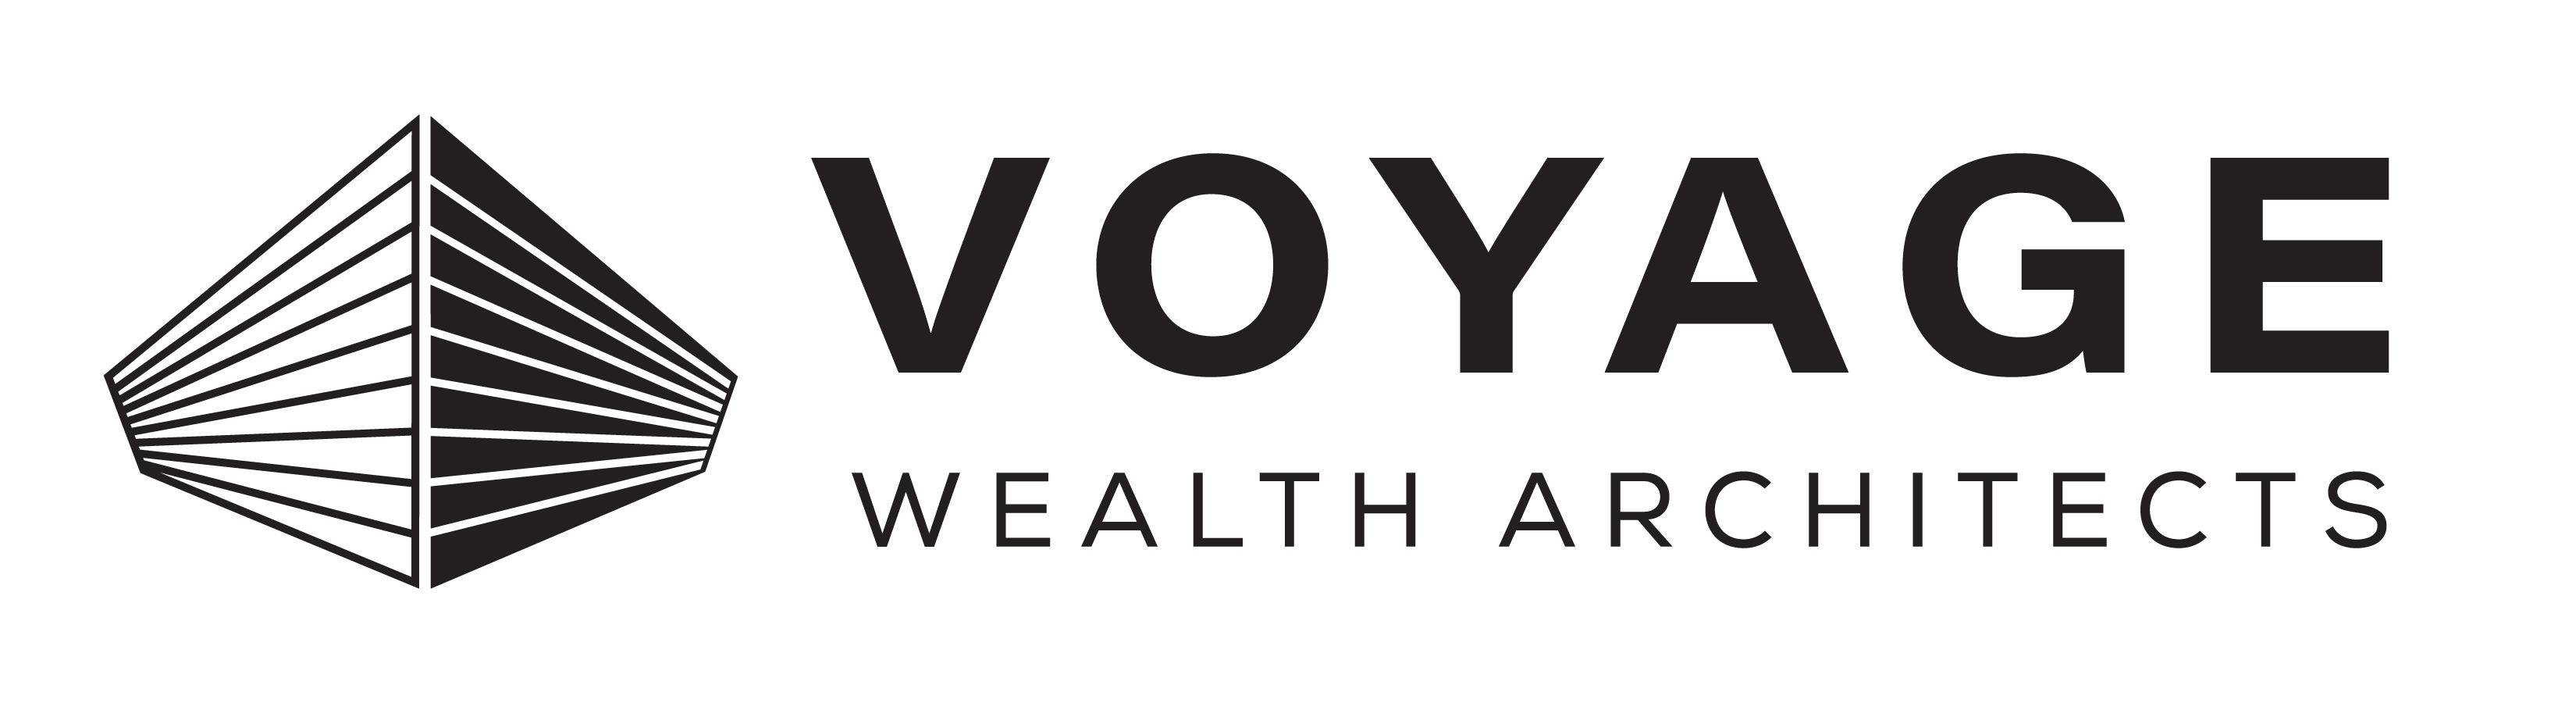 Voyage Wealth Architects